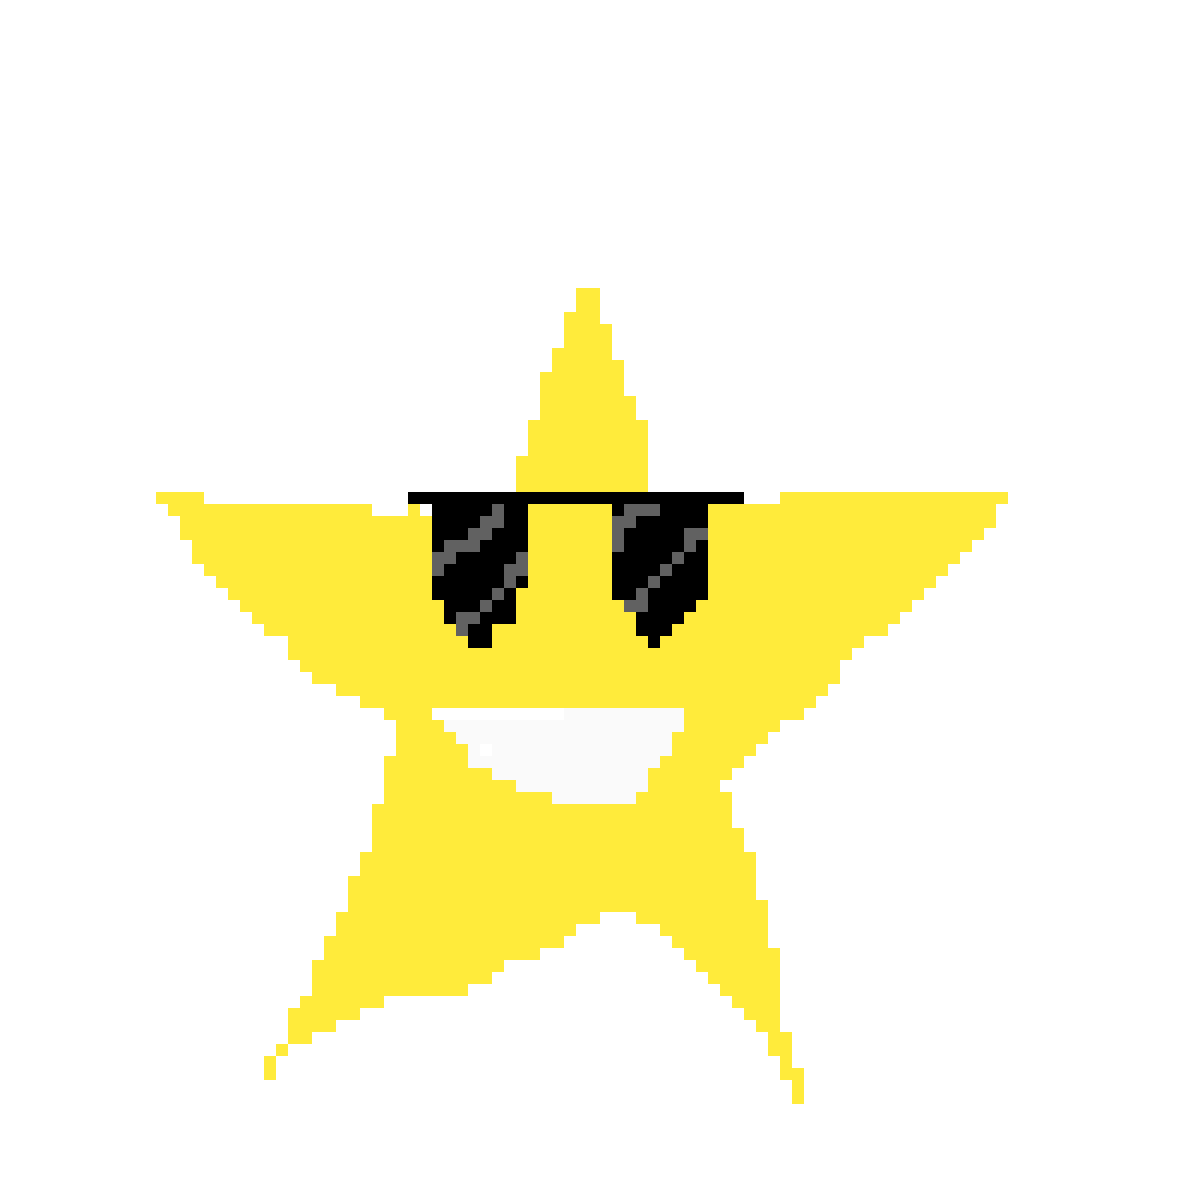 Cool Star dessin PNG image de fond